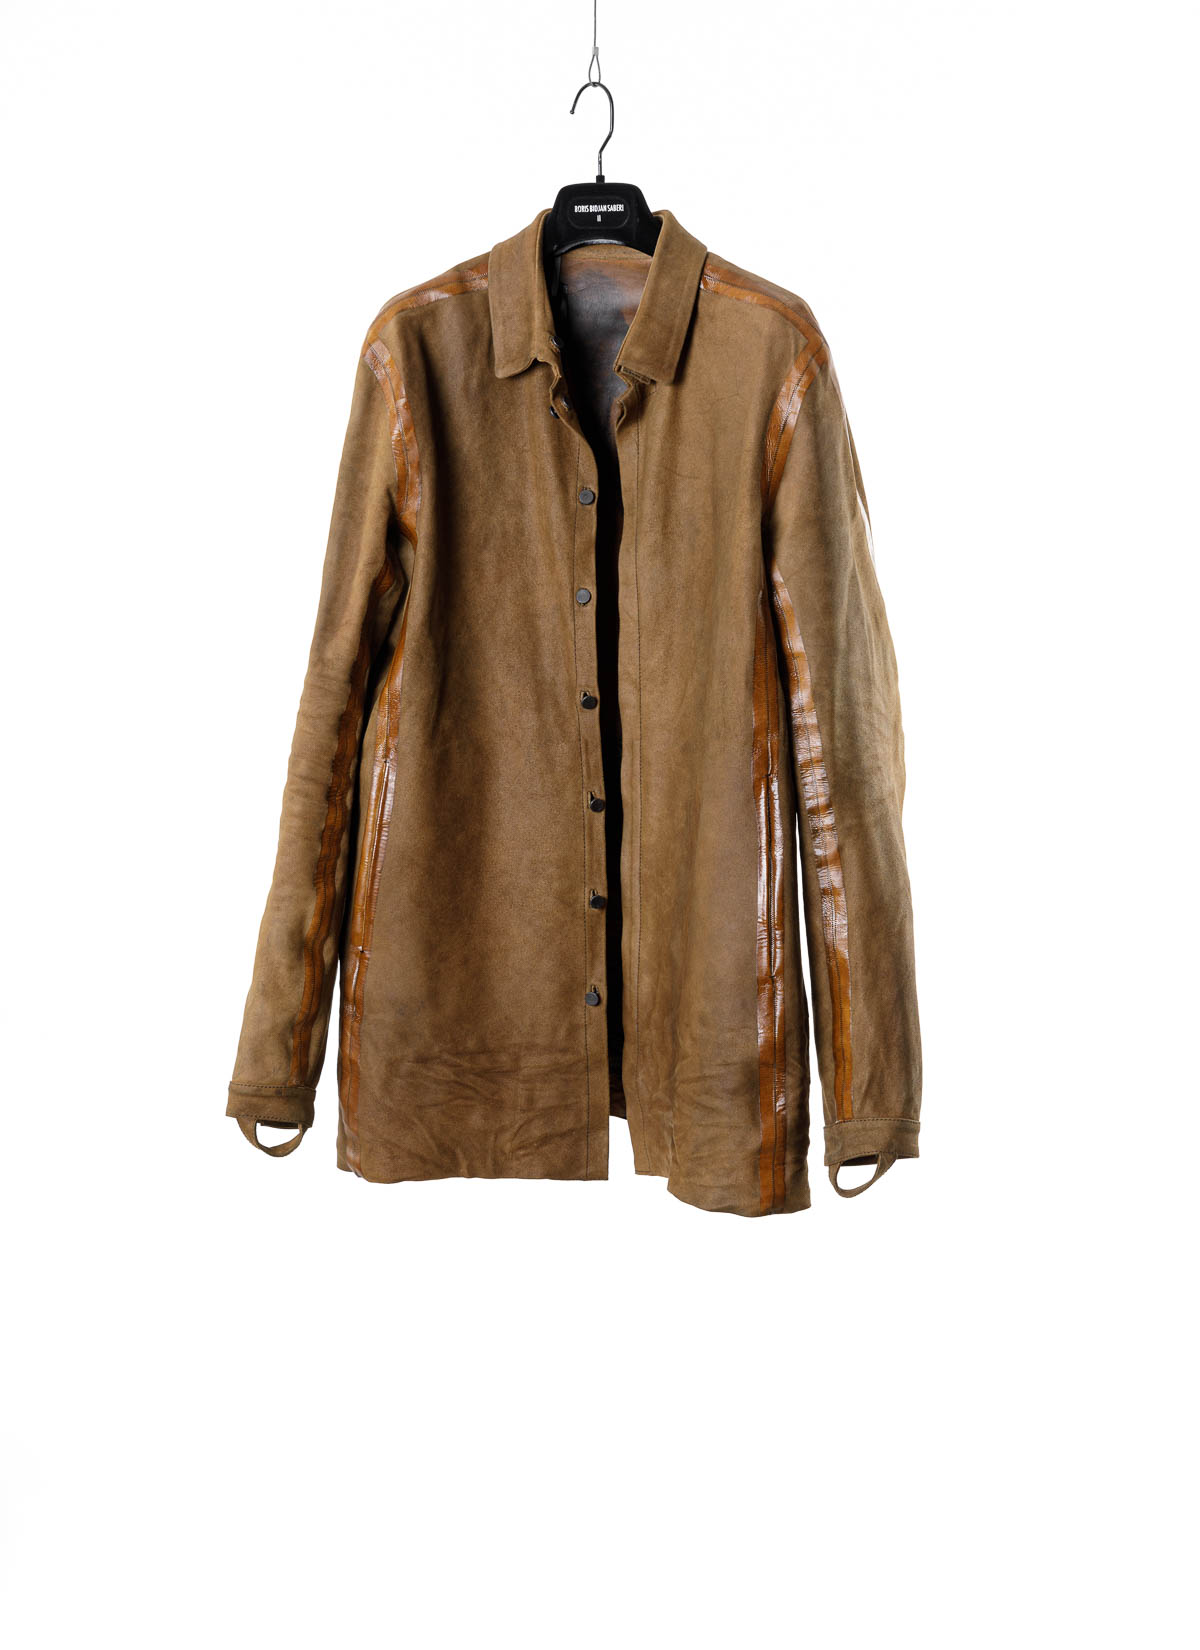 hide-m | BORIS BIDJAN SABERI Shirt Jacket SHIRT5, gum horse leather